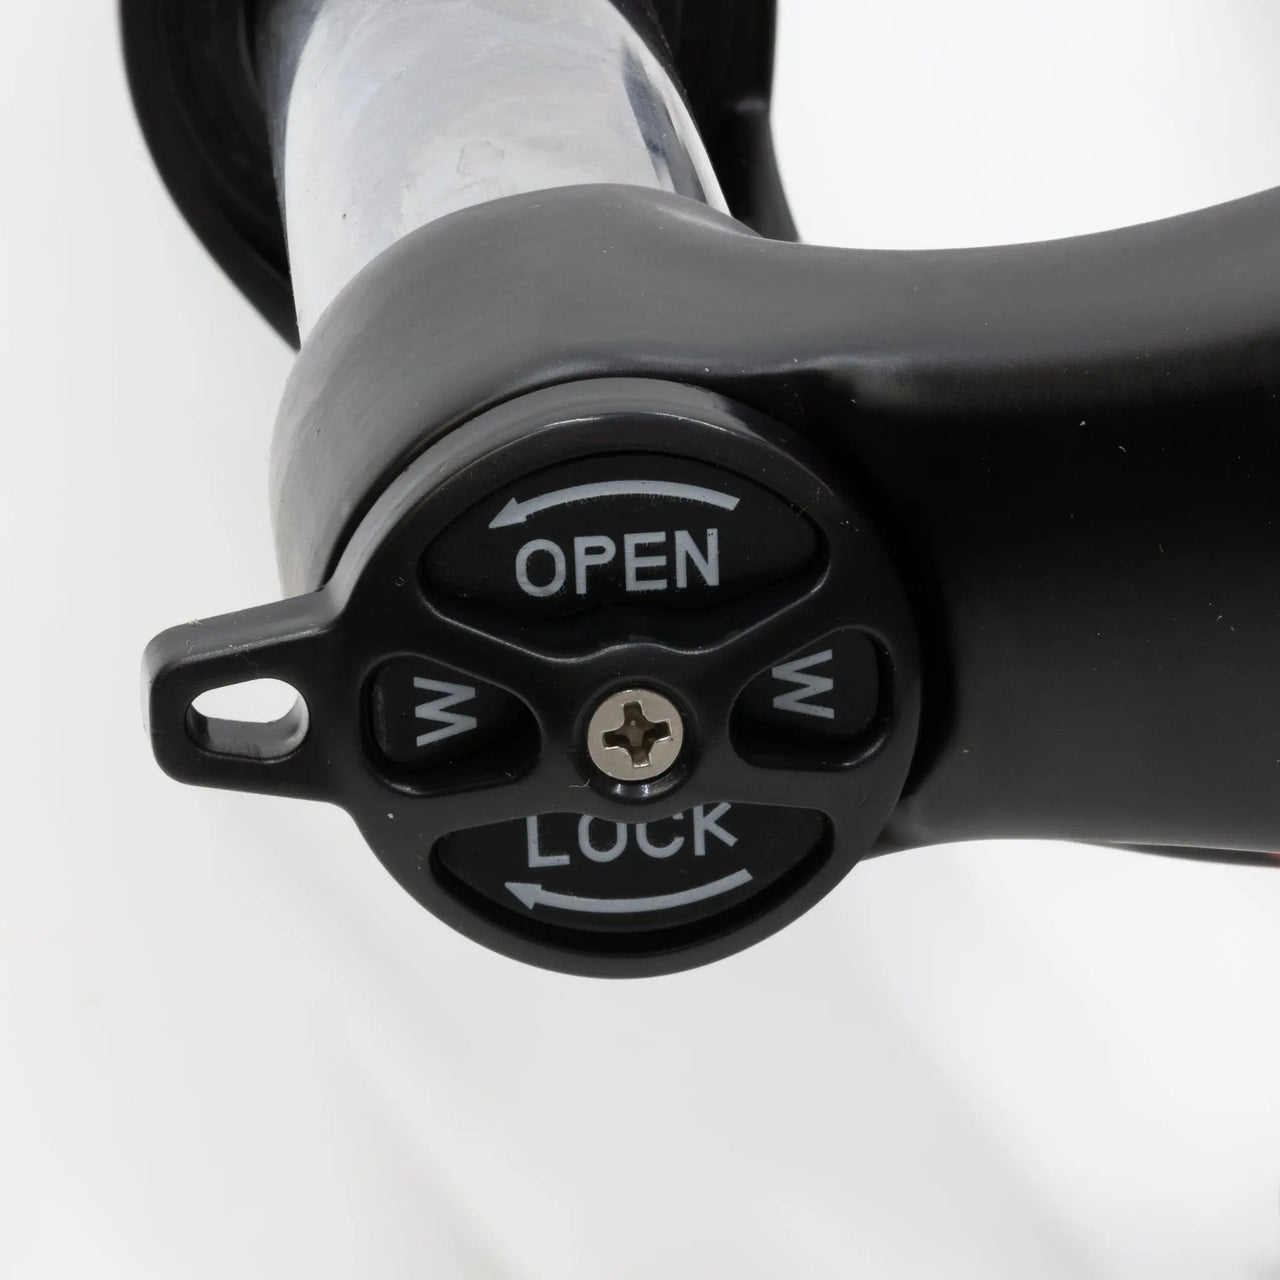 26 Suspension Fork Black 120mm Travel Air Bike Mountain Bike MTB Lockout & Quick Release - Air BikeSuspension Fork